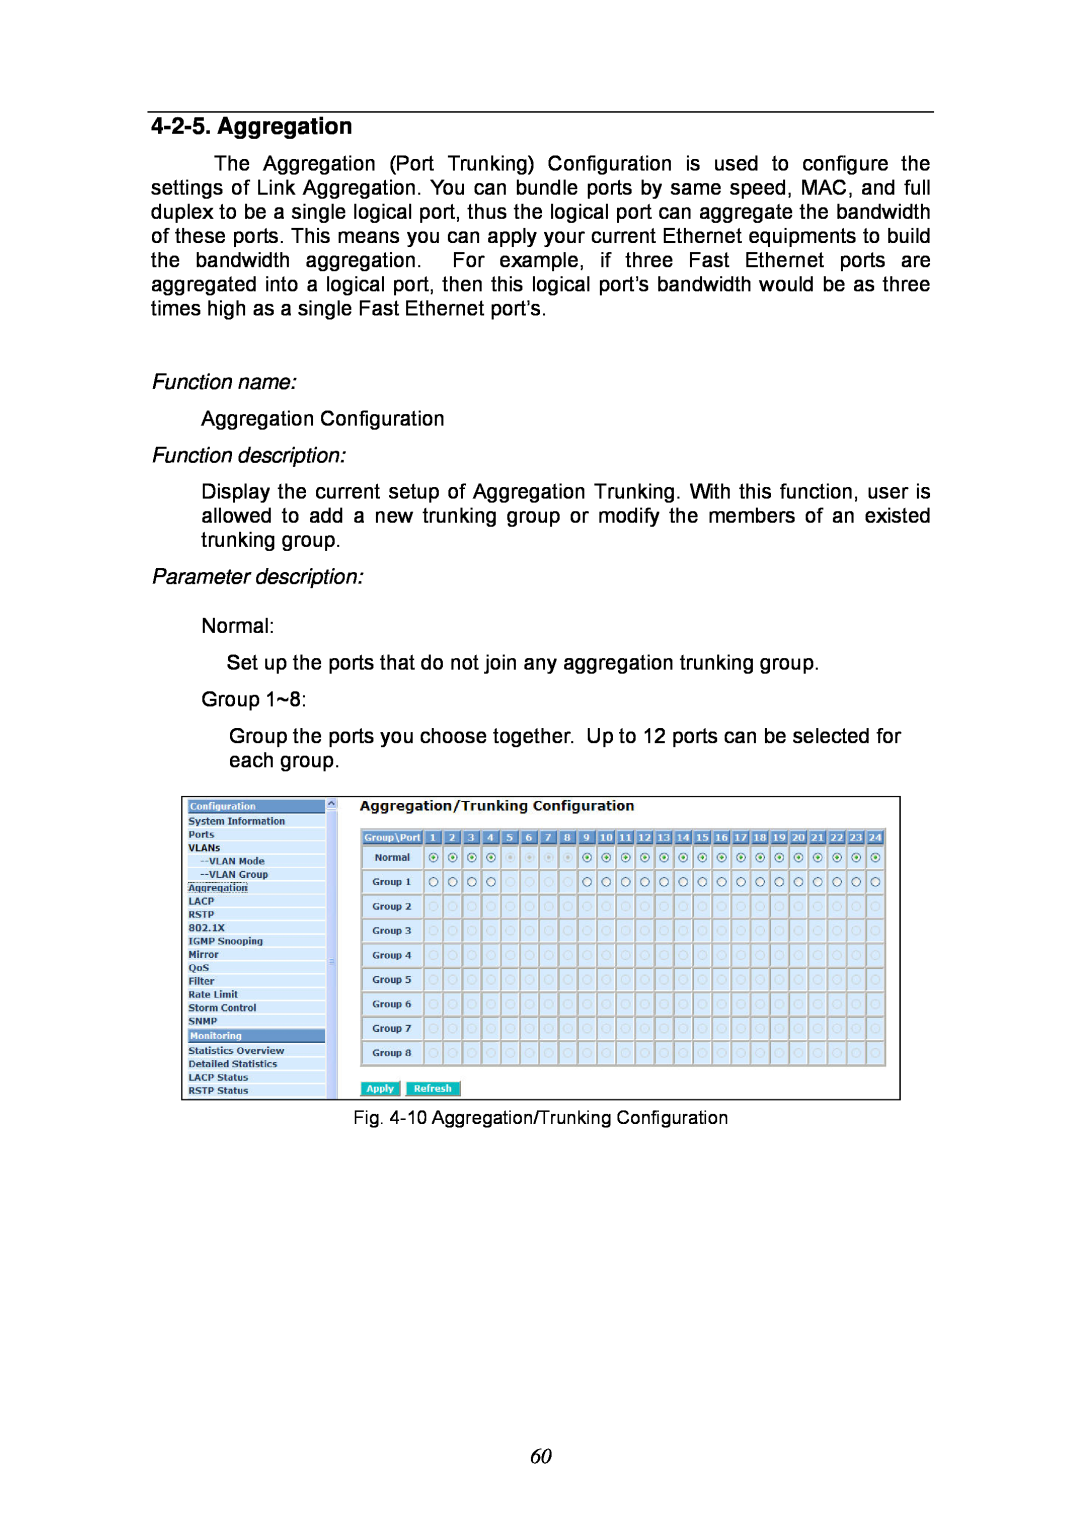 KTI Networks KGS-2404 manual Aggregation, Function name, Function description, Parameter description 